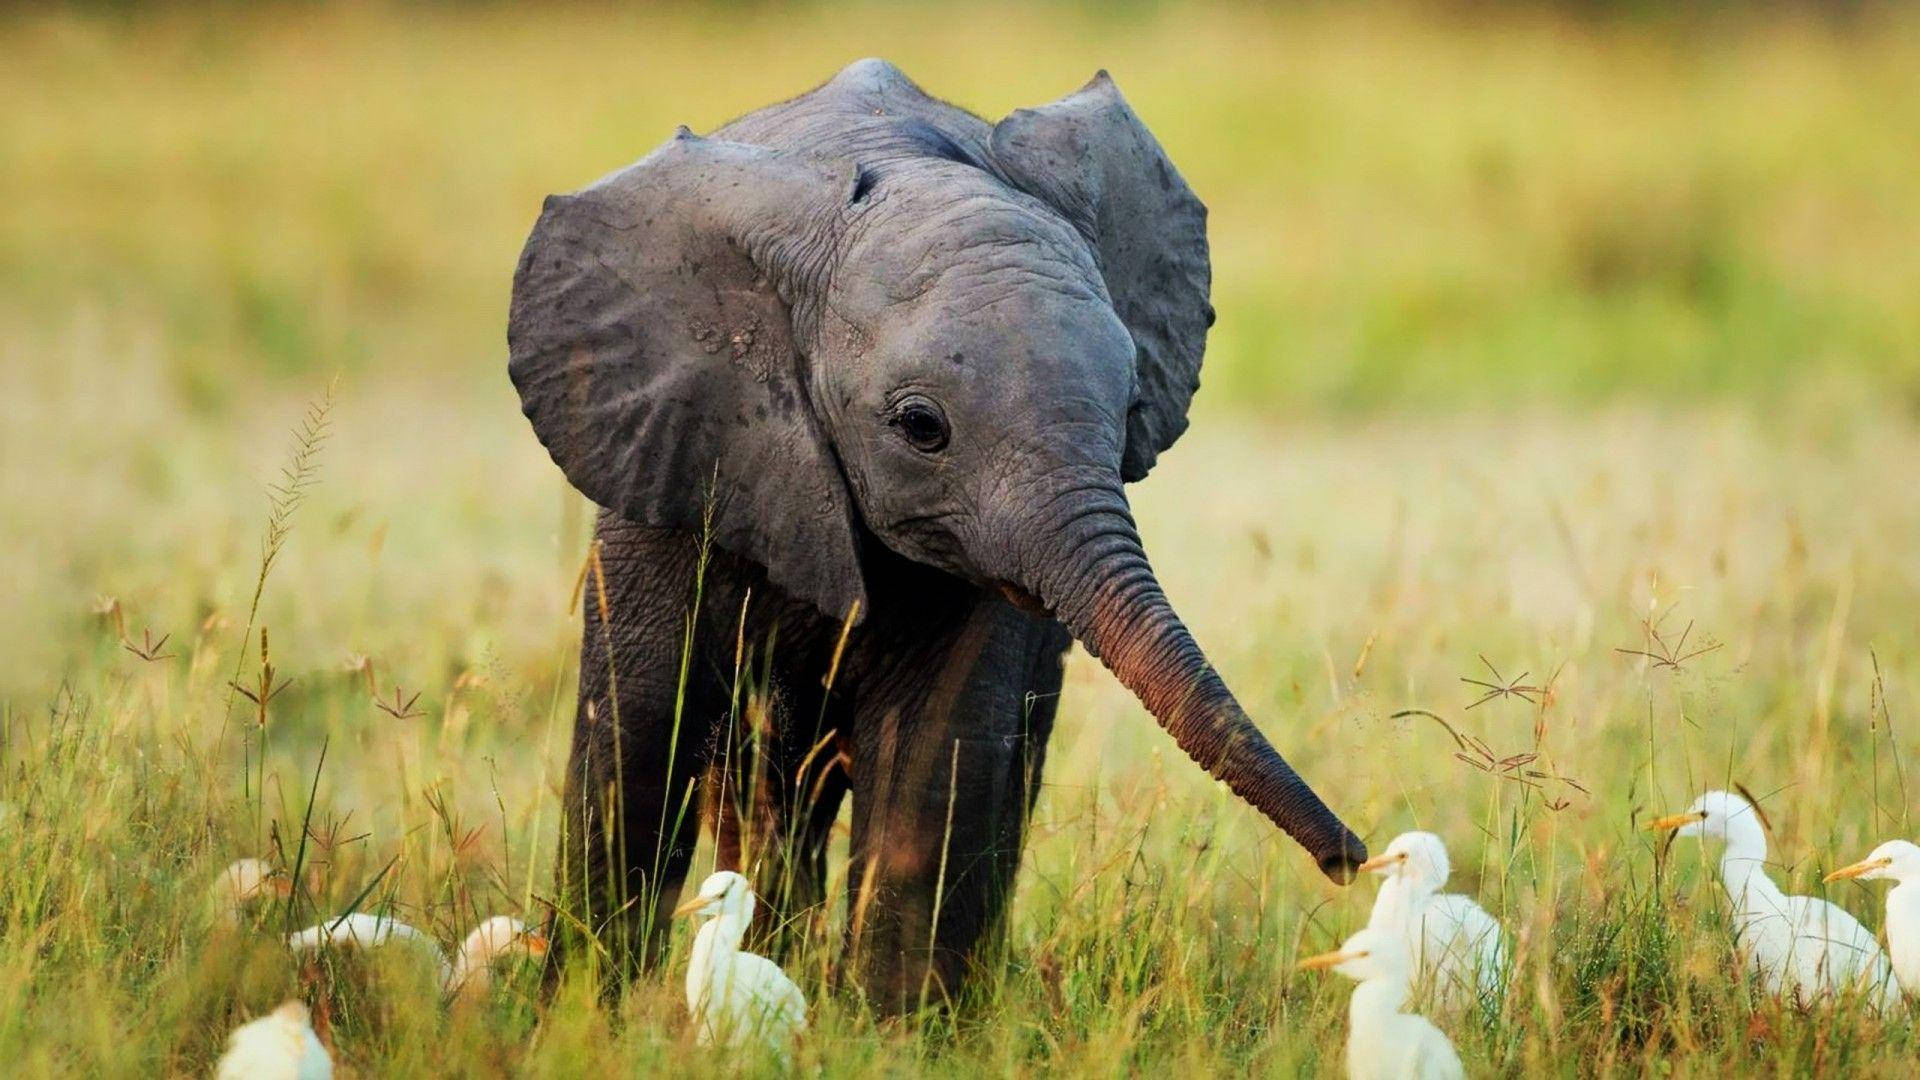 A Majestic Looking Elephant in its Natural Habitat Wallpaper